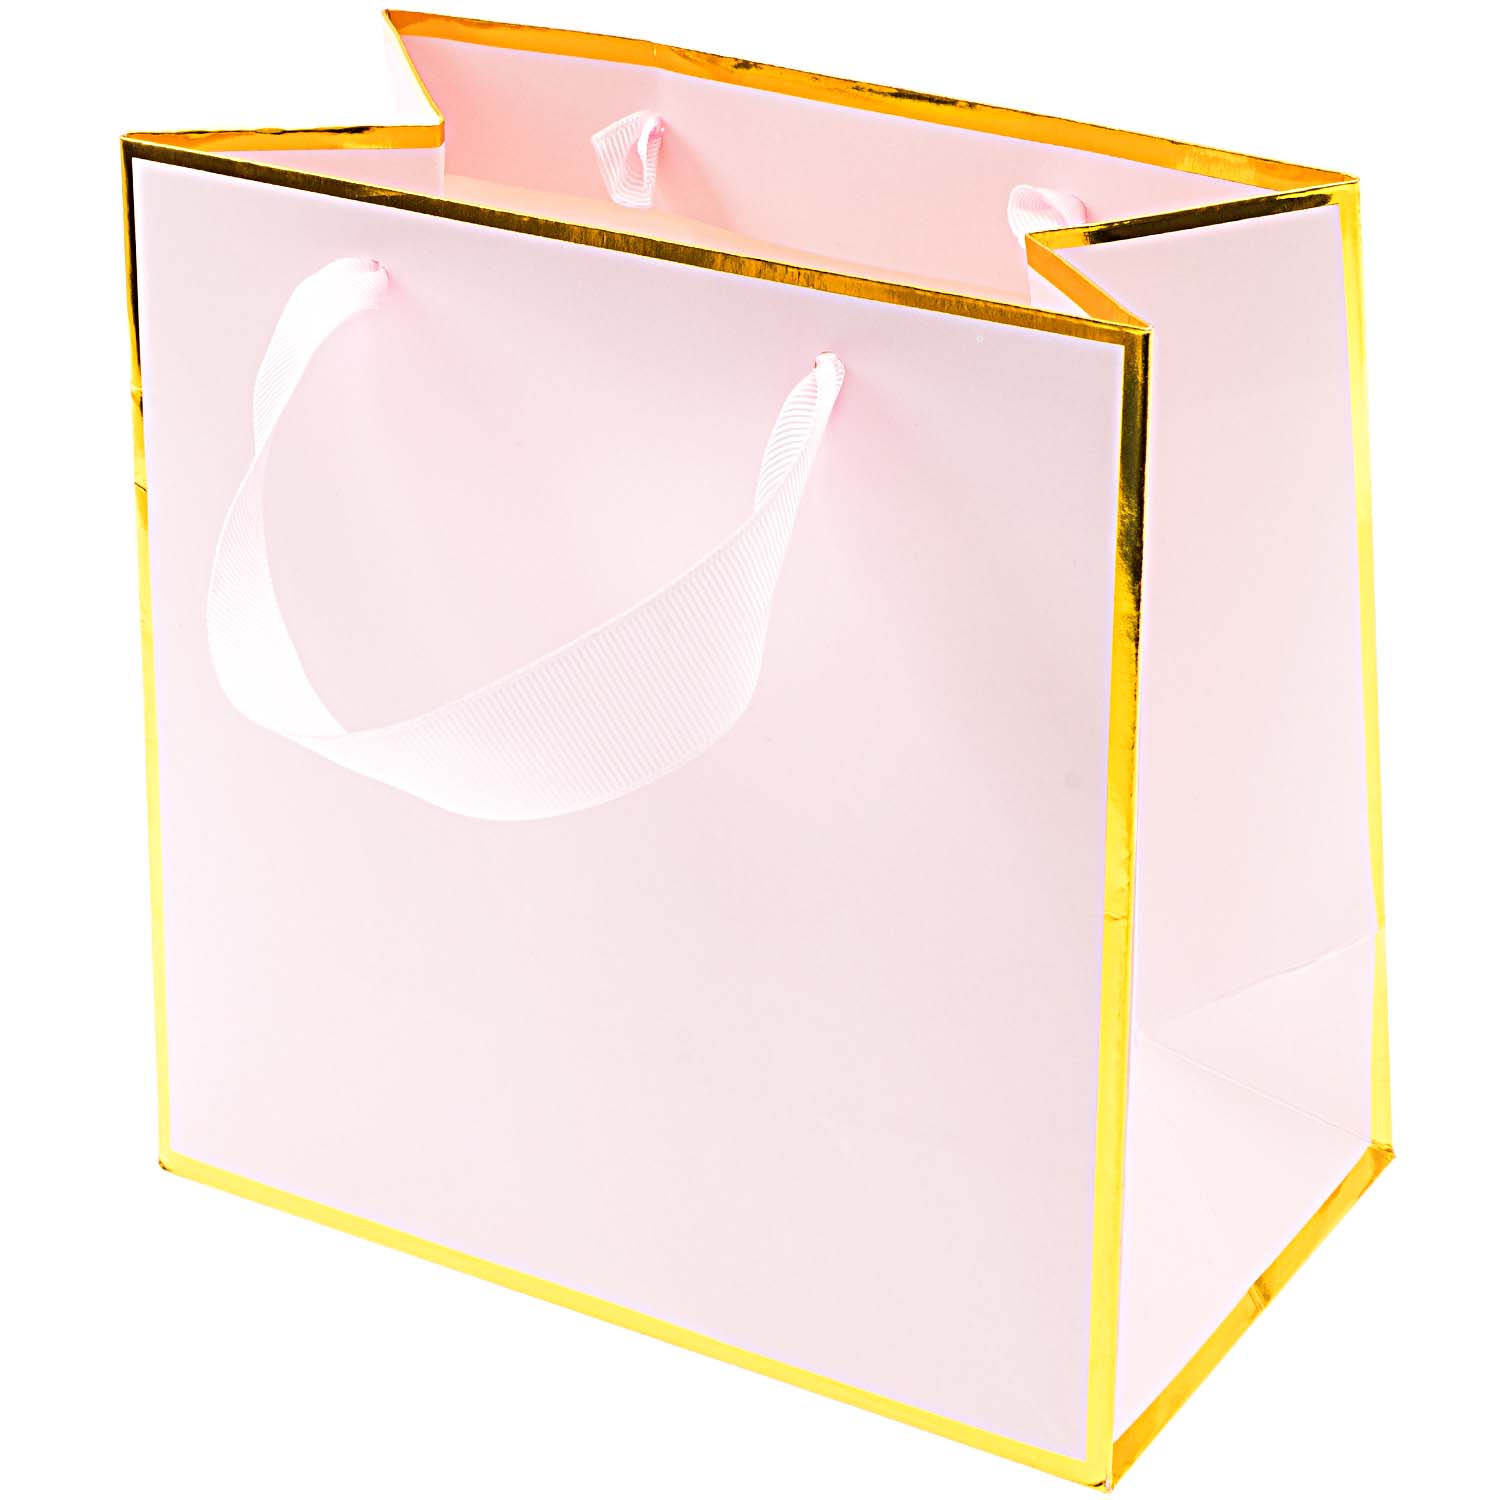 PINK & GOLD GIFT BAG 18cm x 18cm